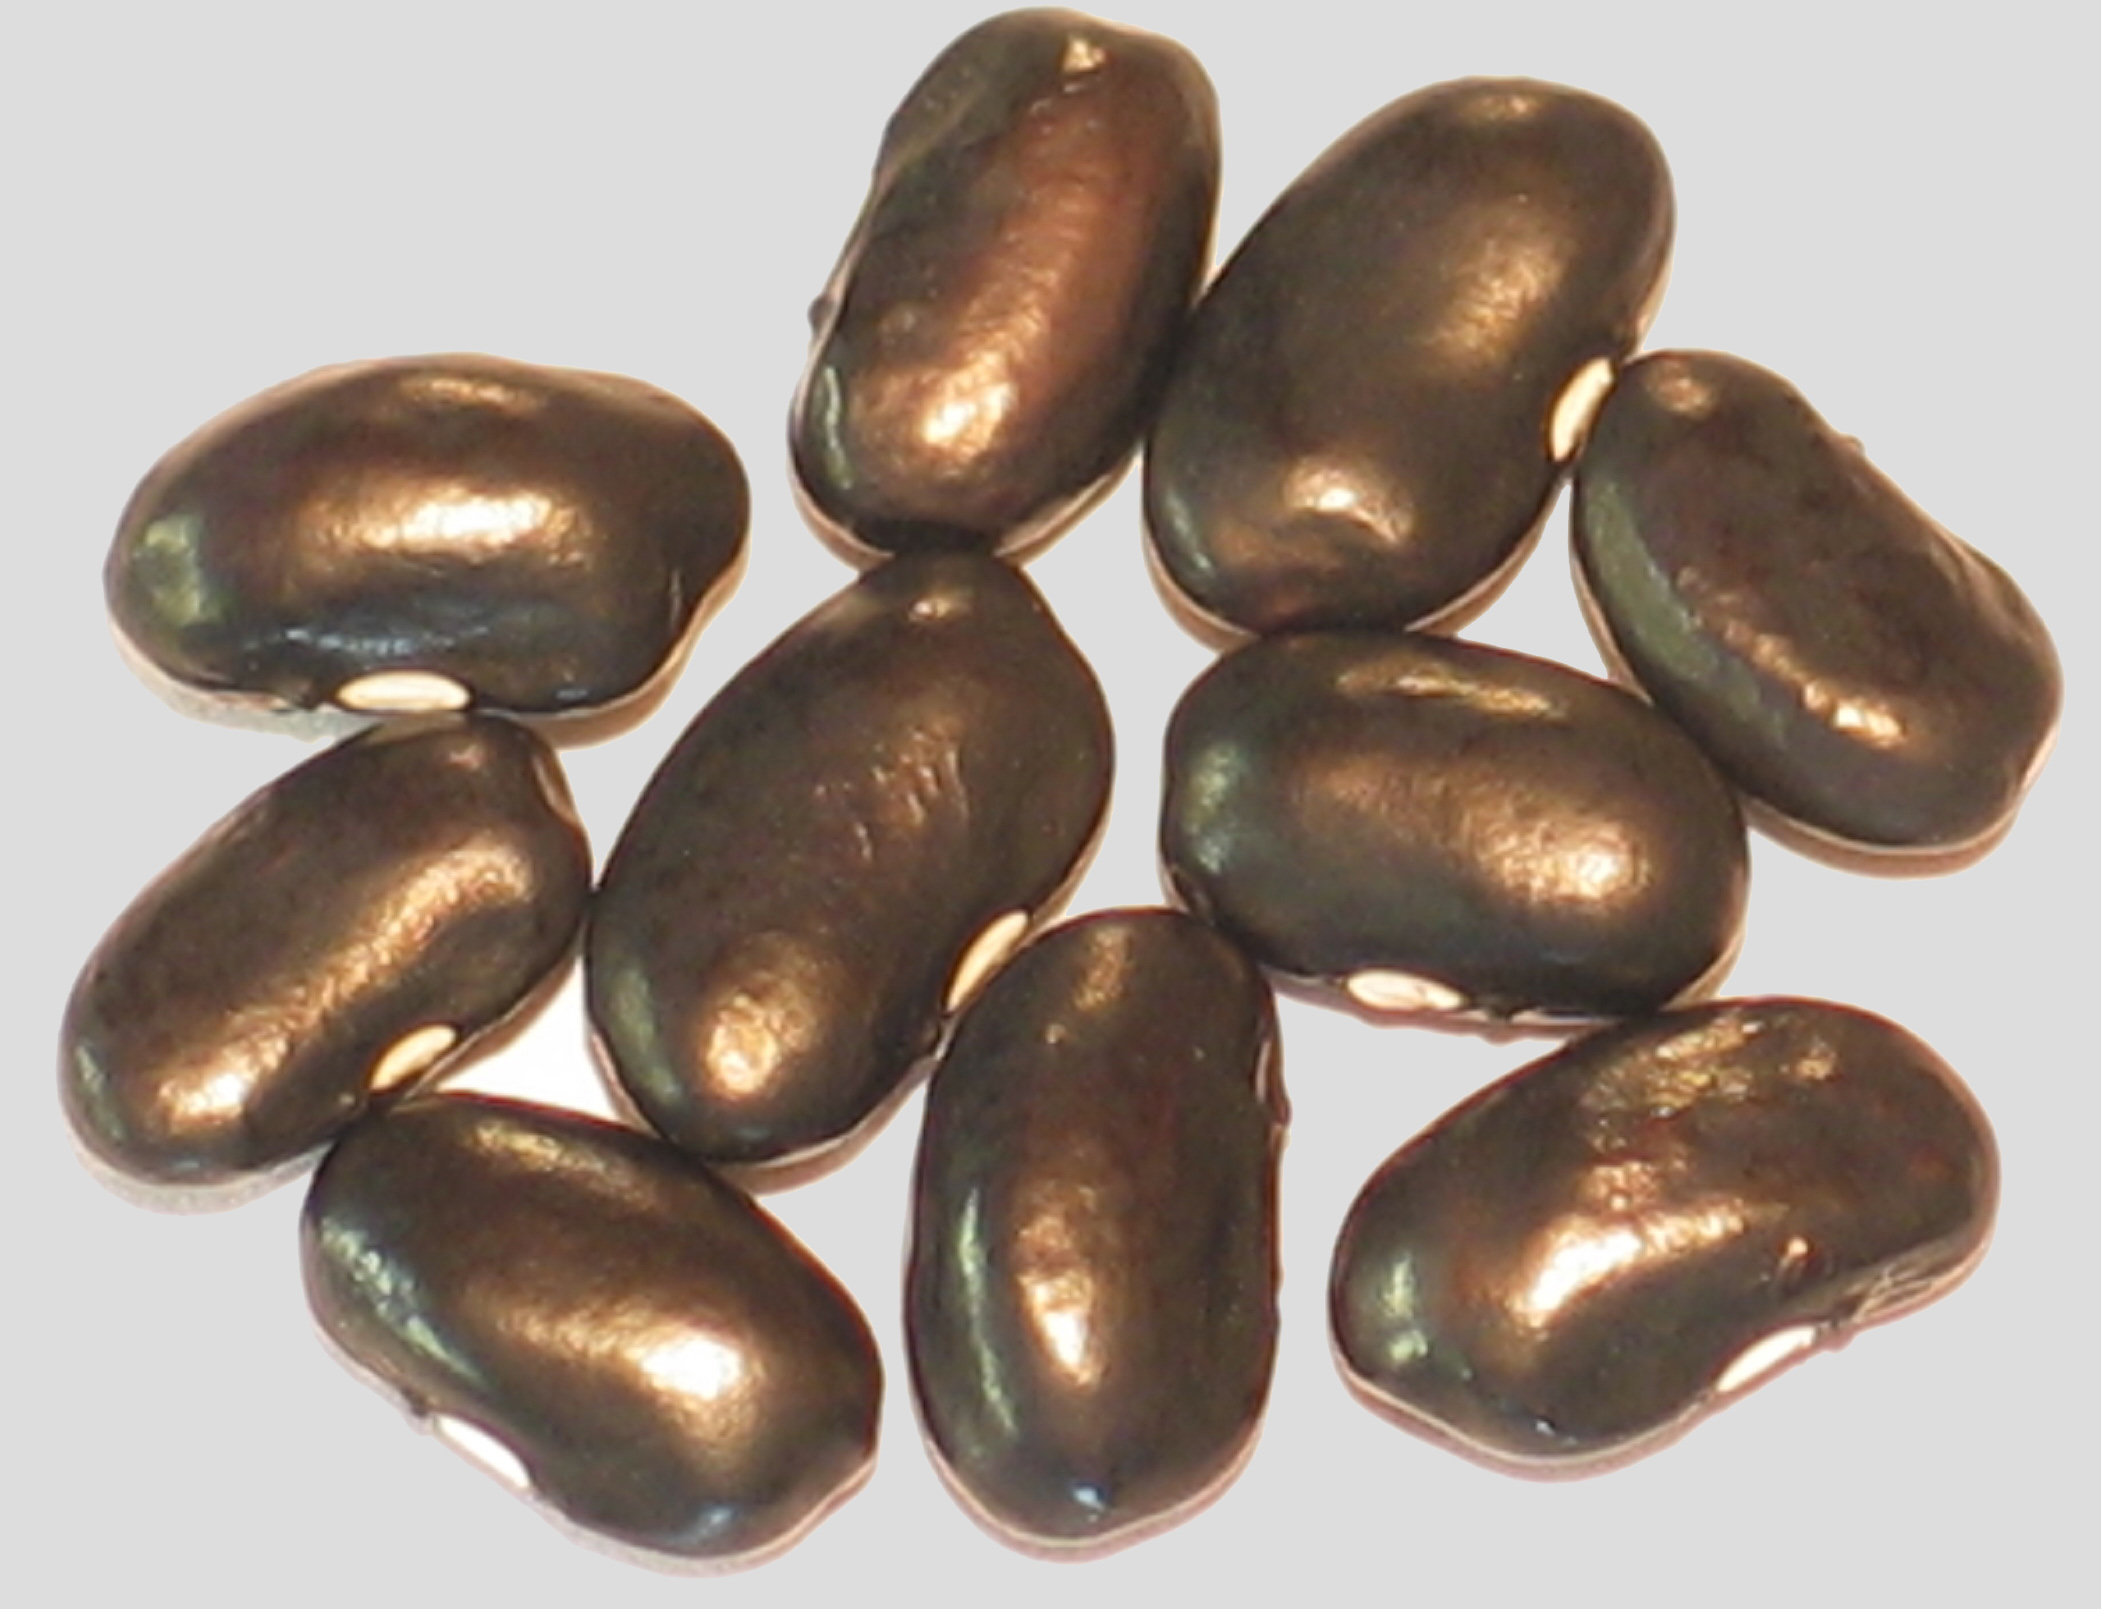 image of Black Super Nova beans